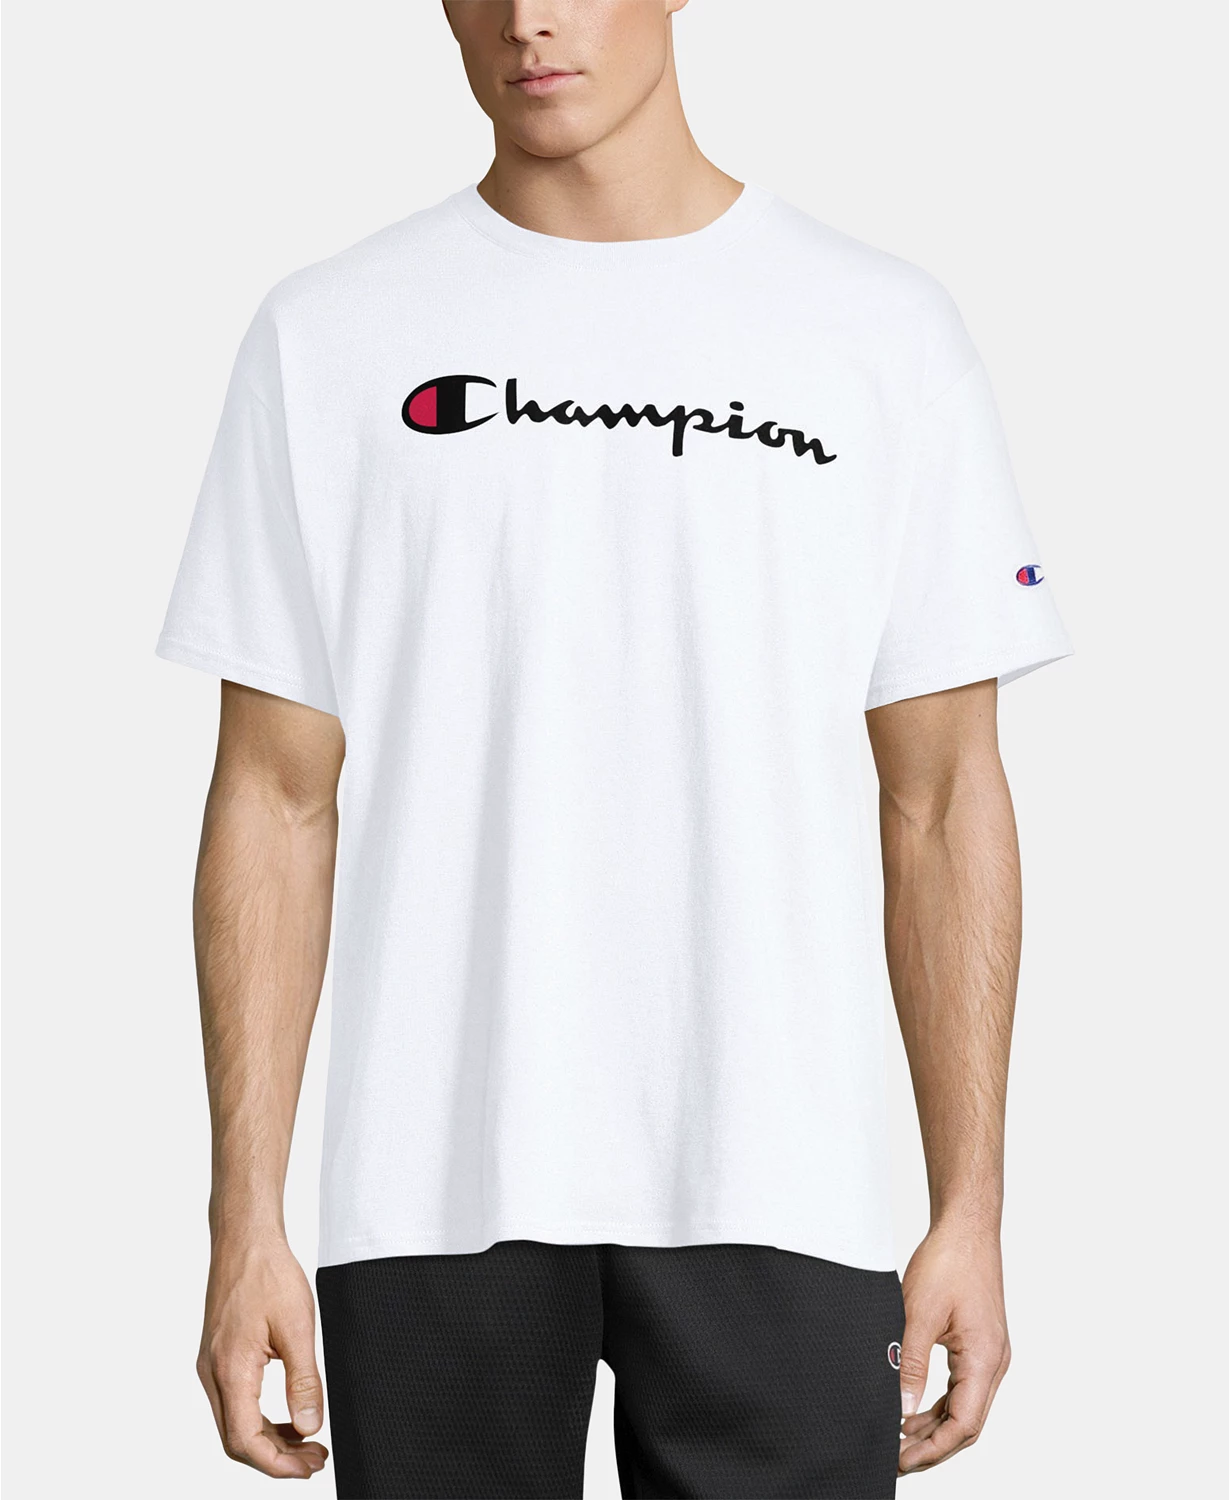 Champion men's script logo tee; oversized t-shirt for teenage girls and guys